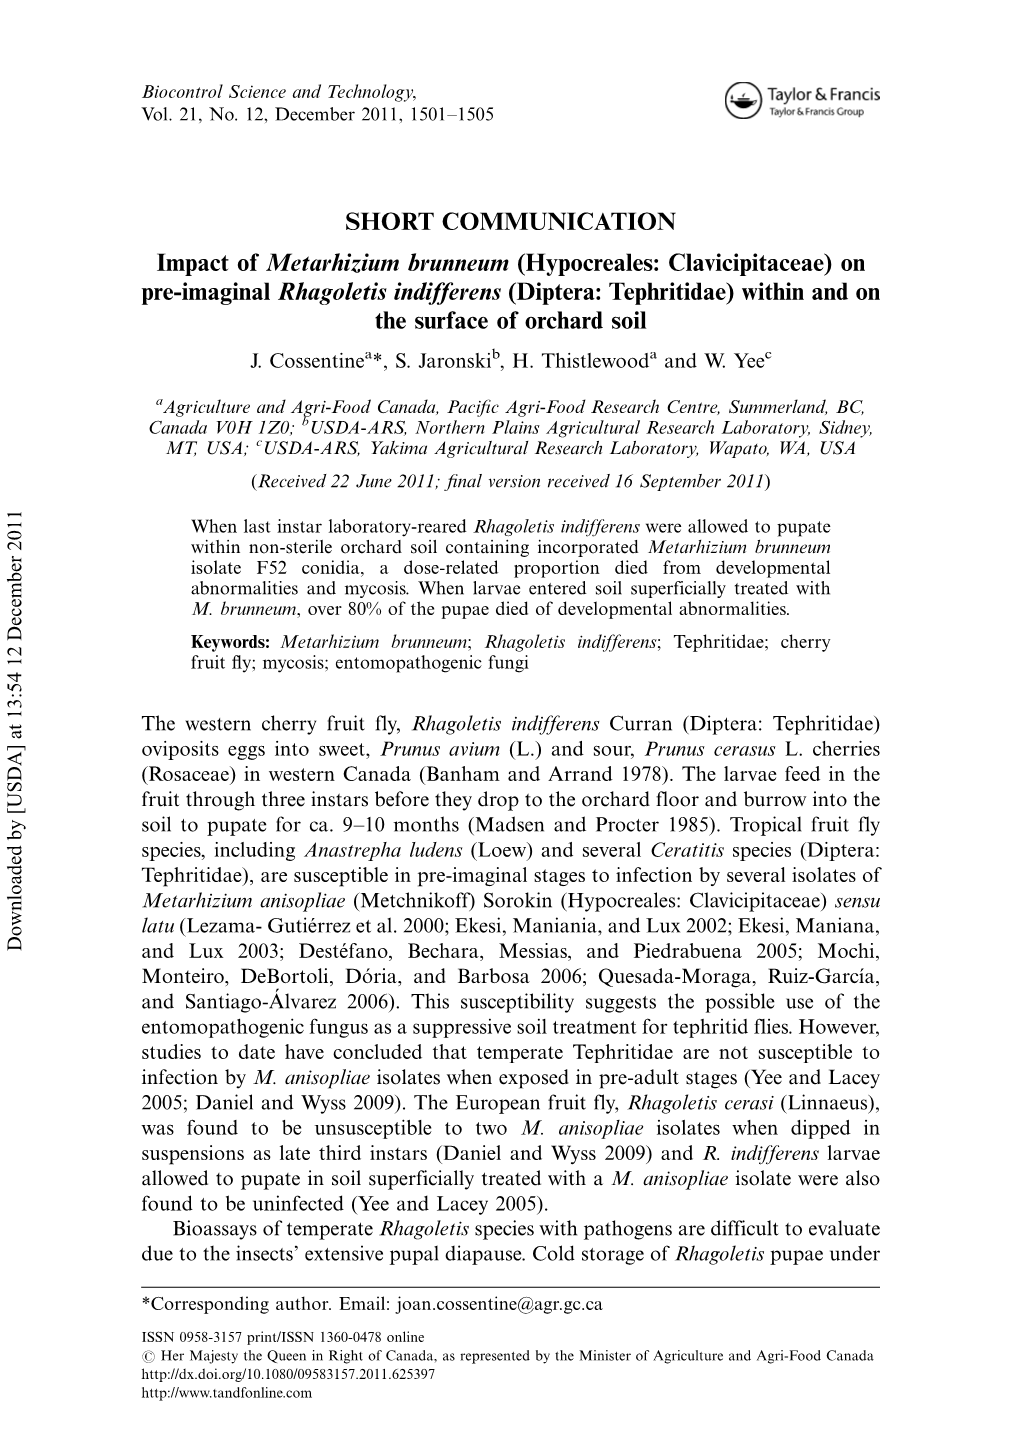 Impact of Metarhizium Brunneum (Hypocreales